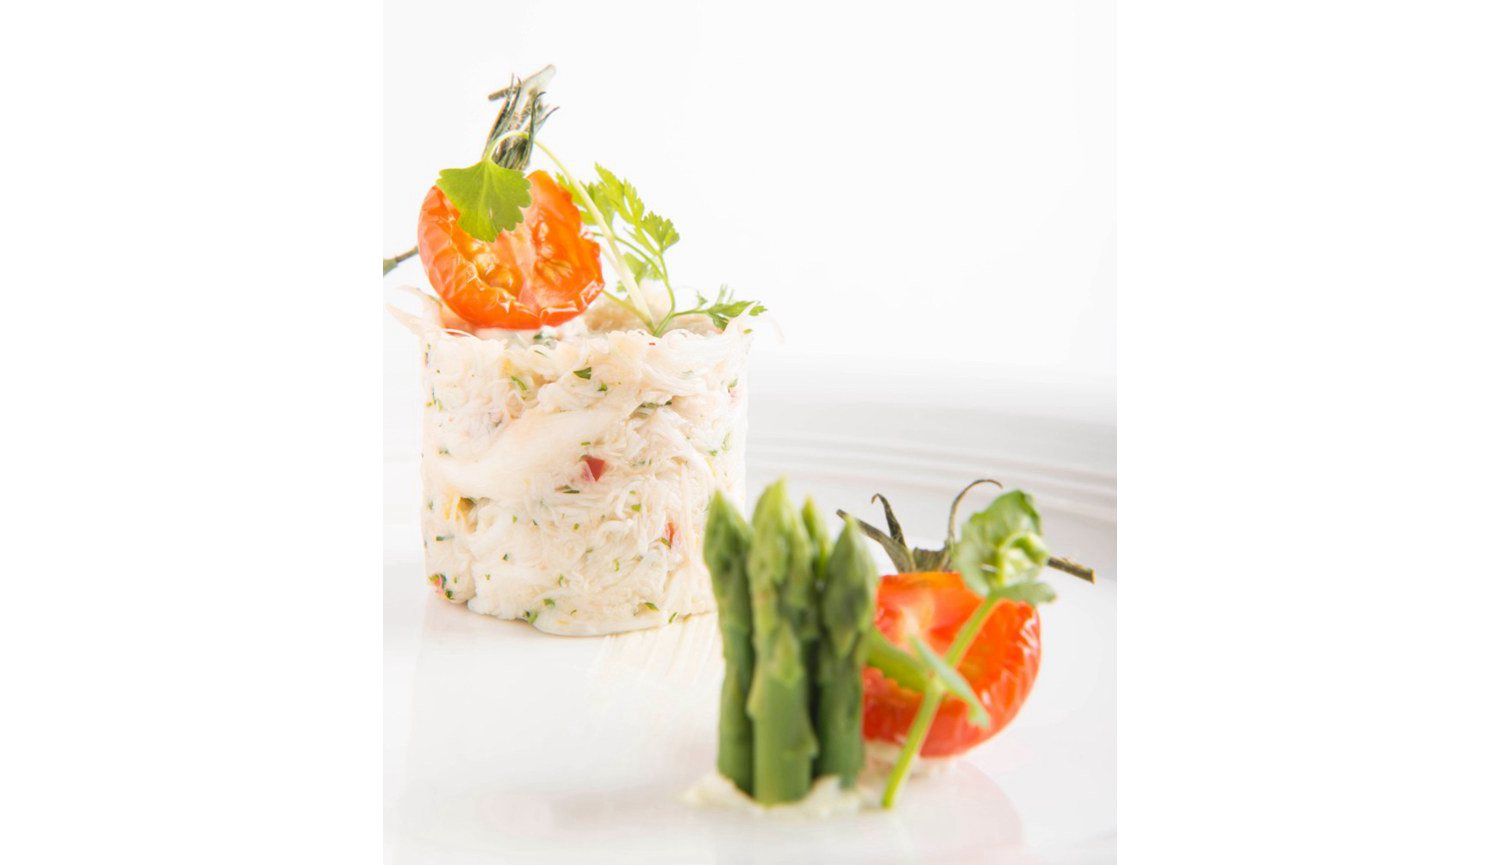 Harvest Menu Signature Dishes - Tian of Lump Crab Salad